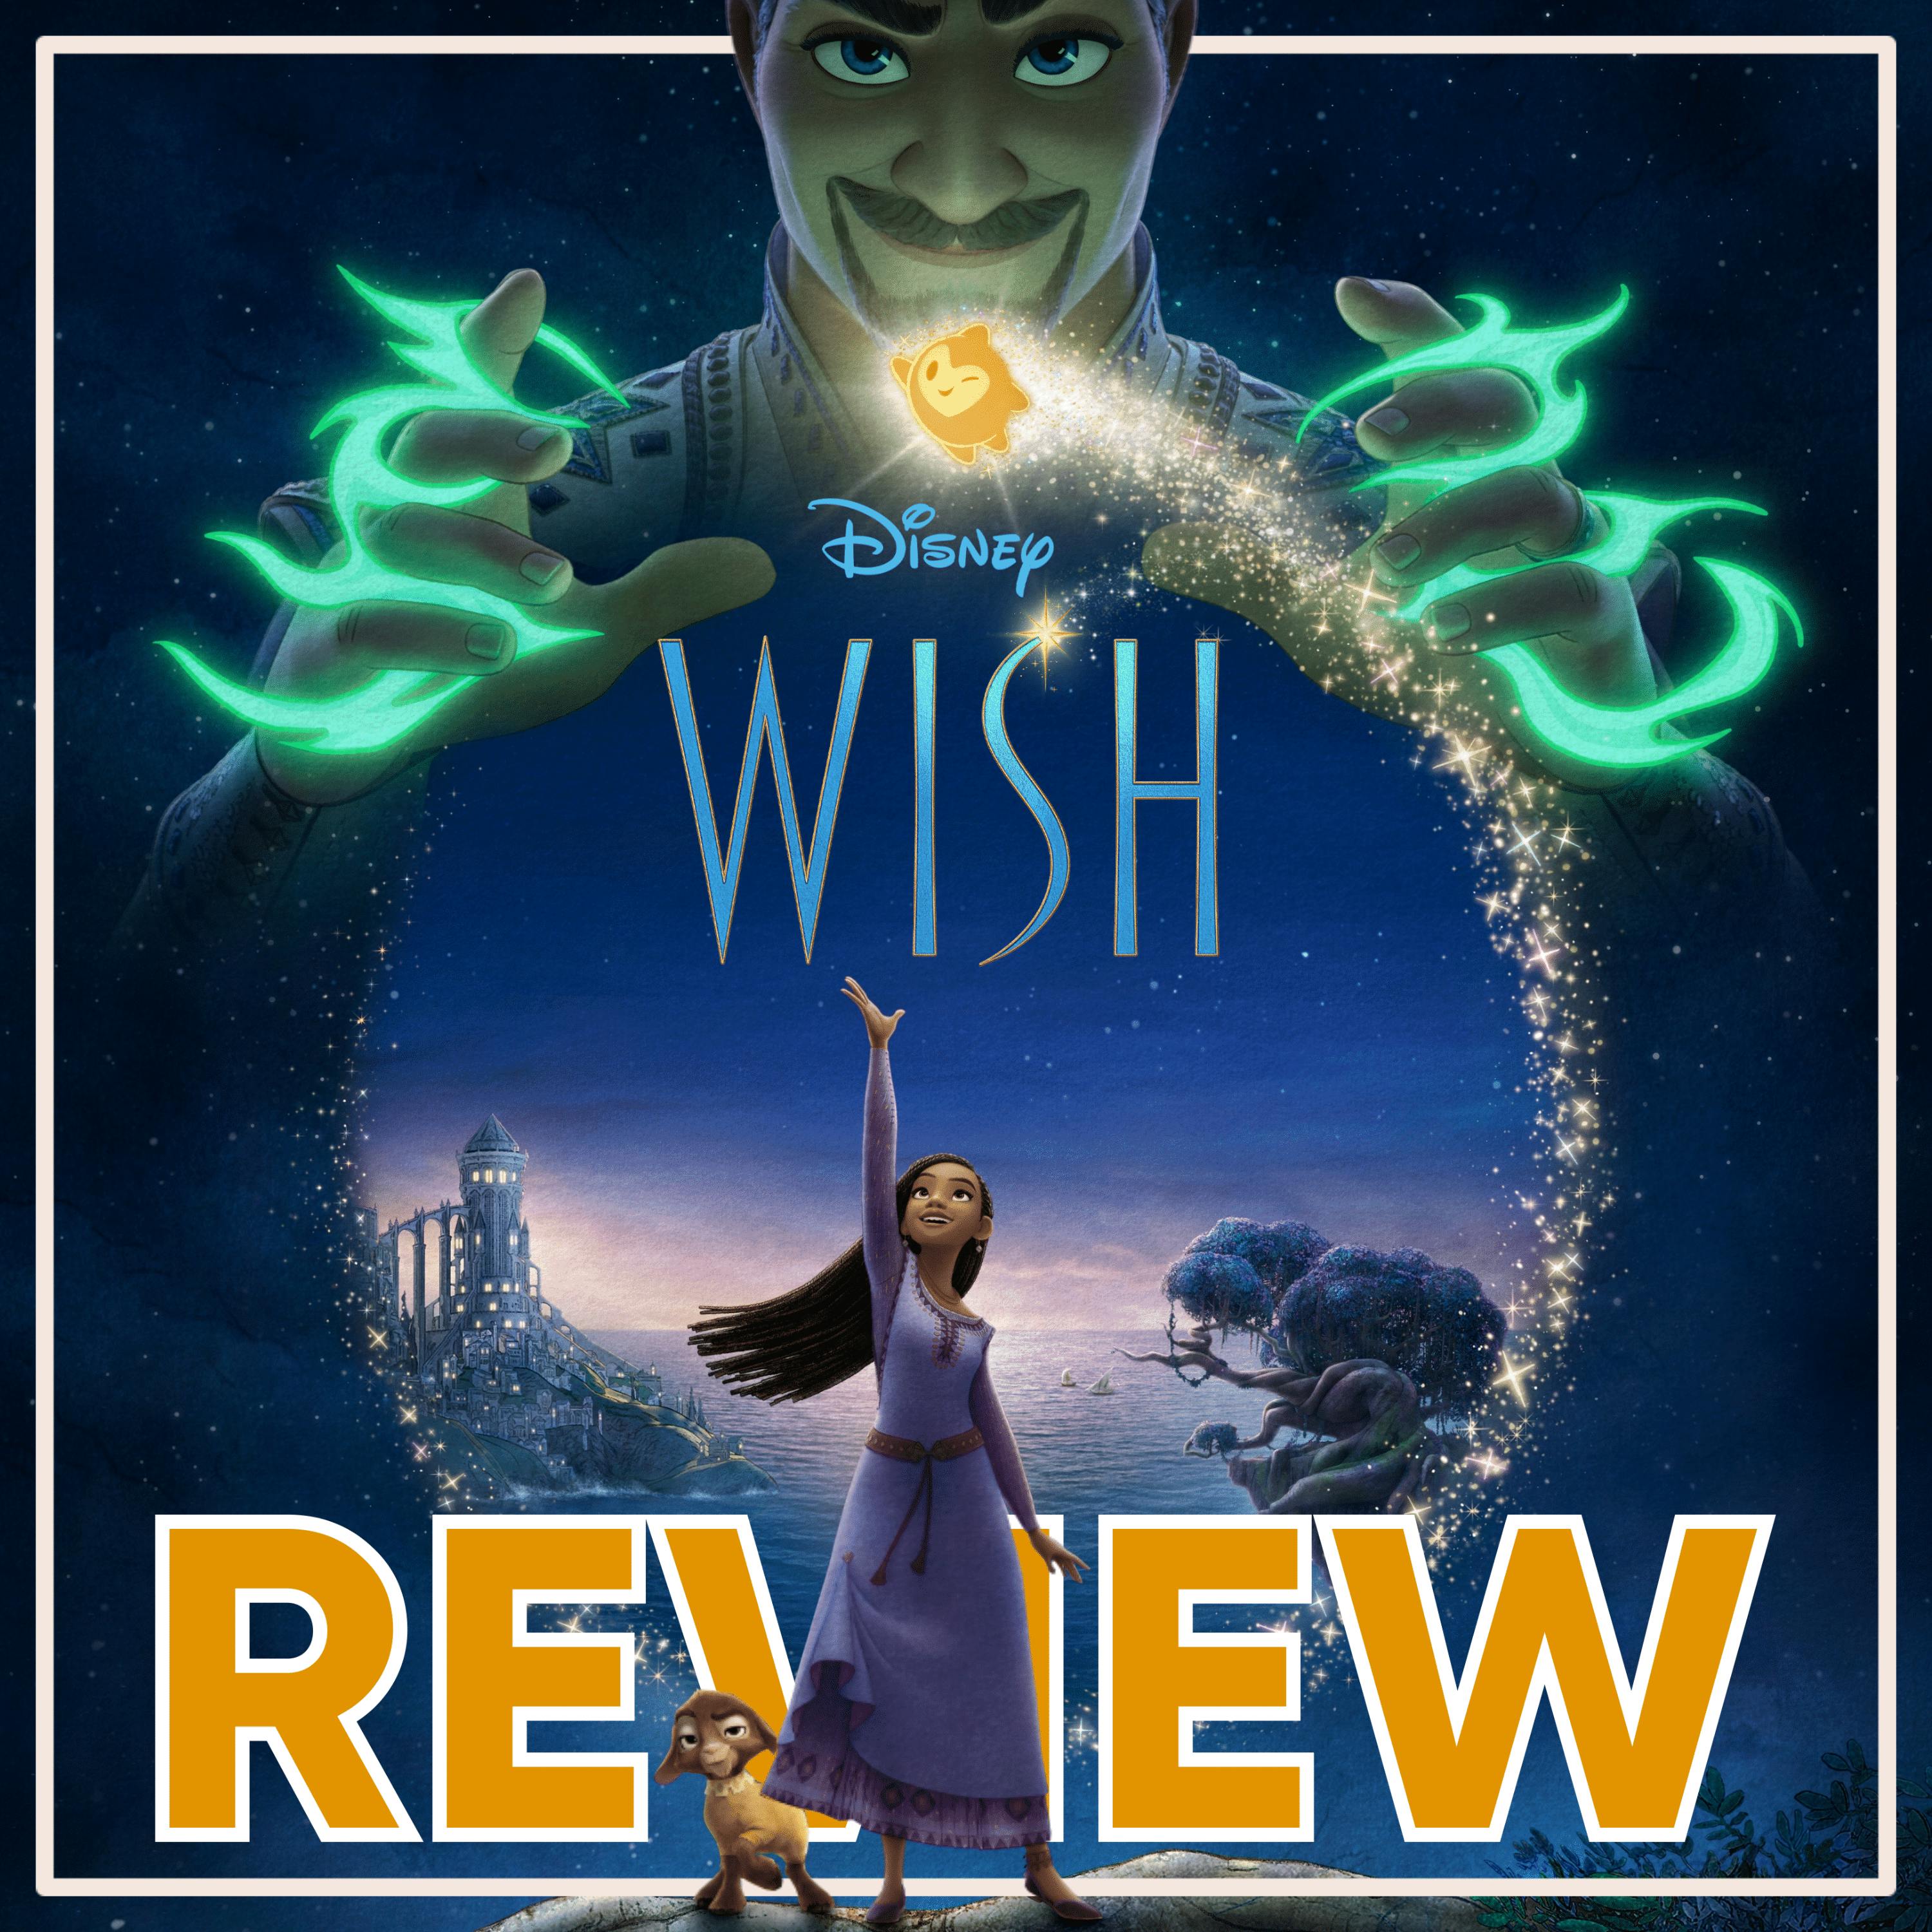 Disney's Wish Movie Review